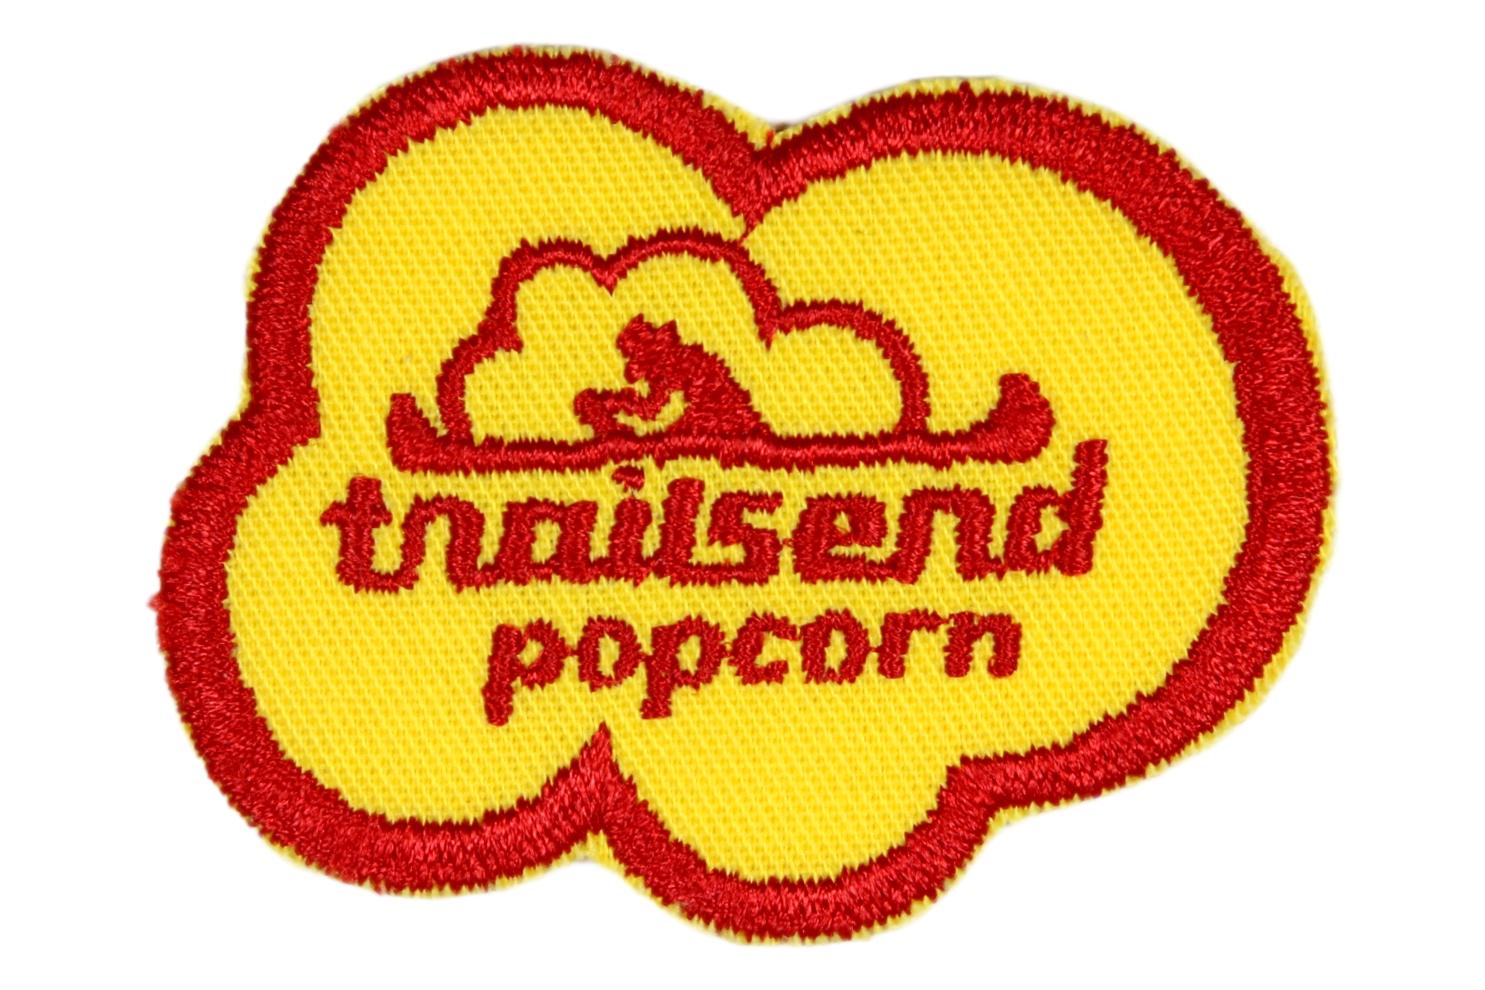 1986 Trail's End Popcorn Patch